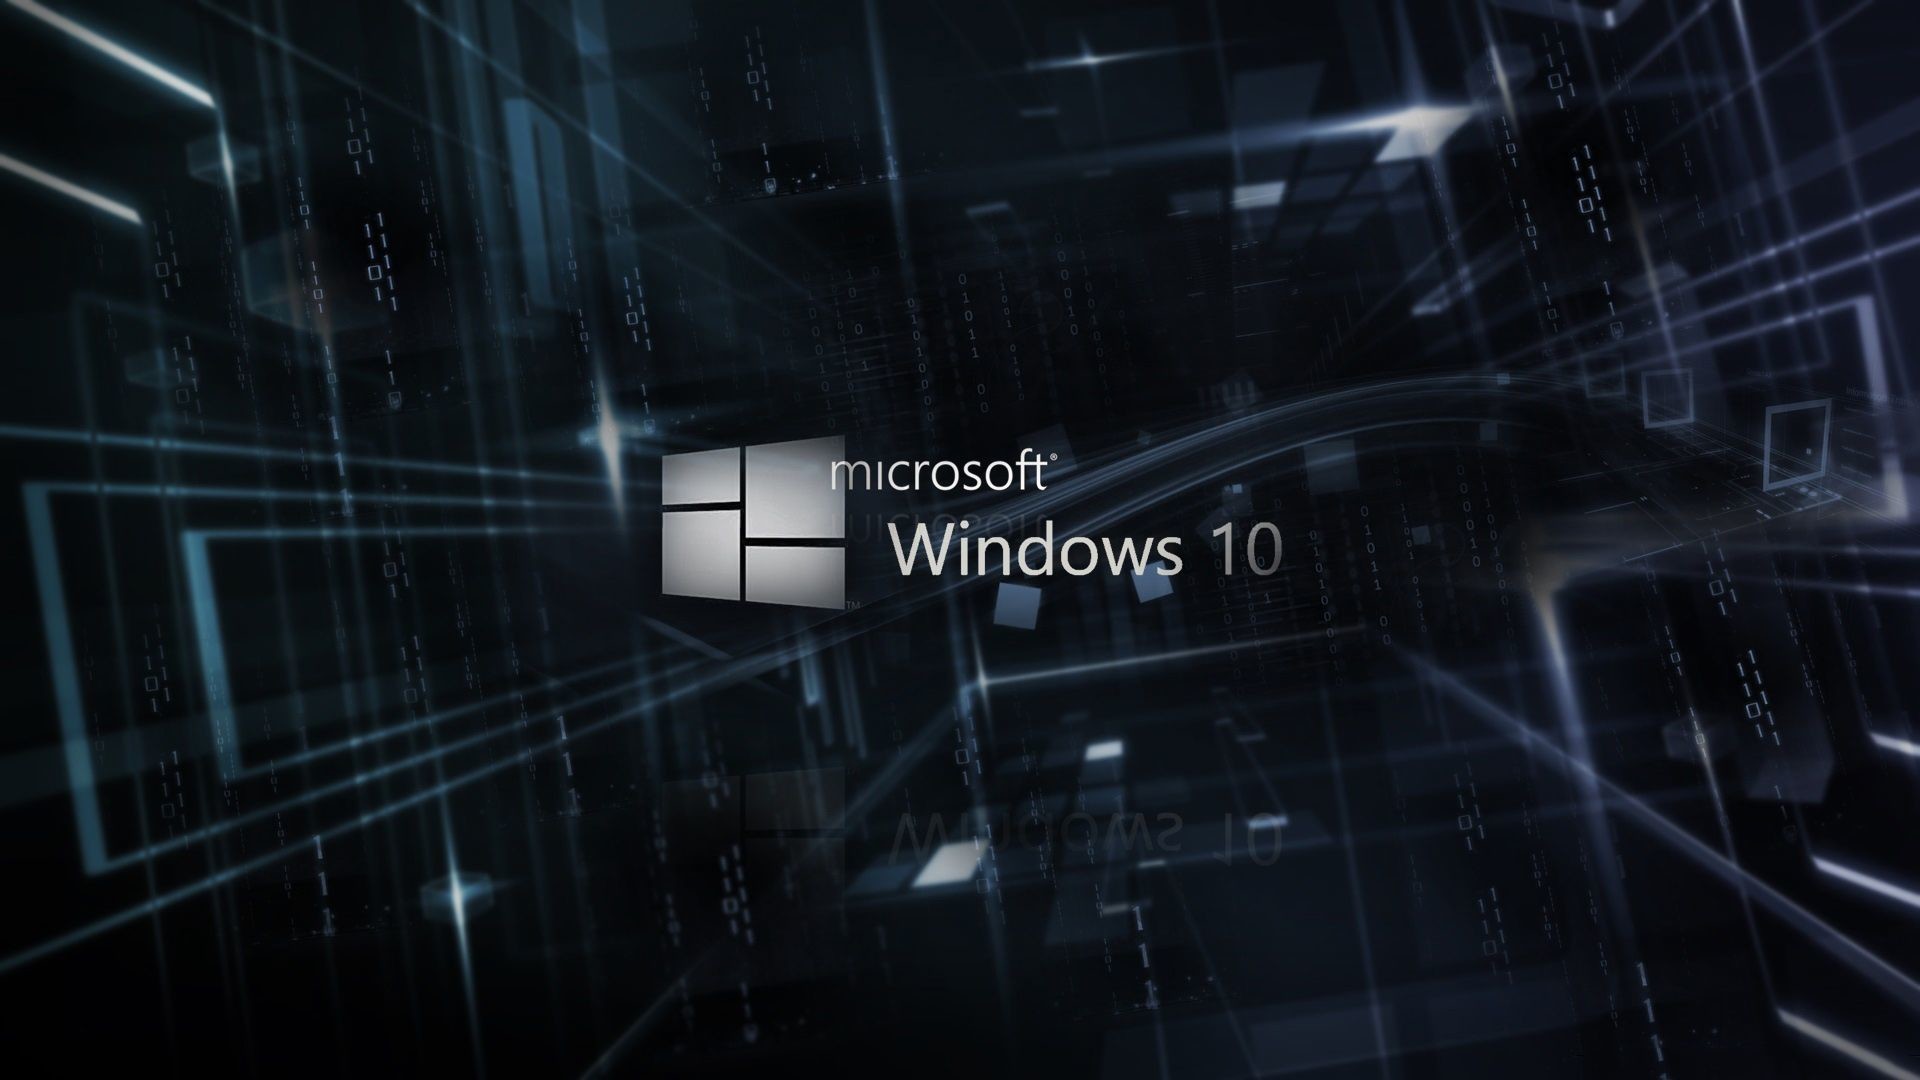 1920x1080 Windows 10 Logo Desktop Wallpaper HD newwallpaperhd.com